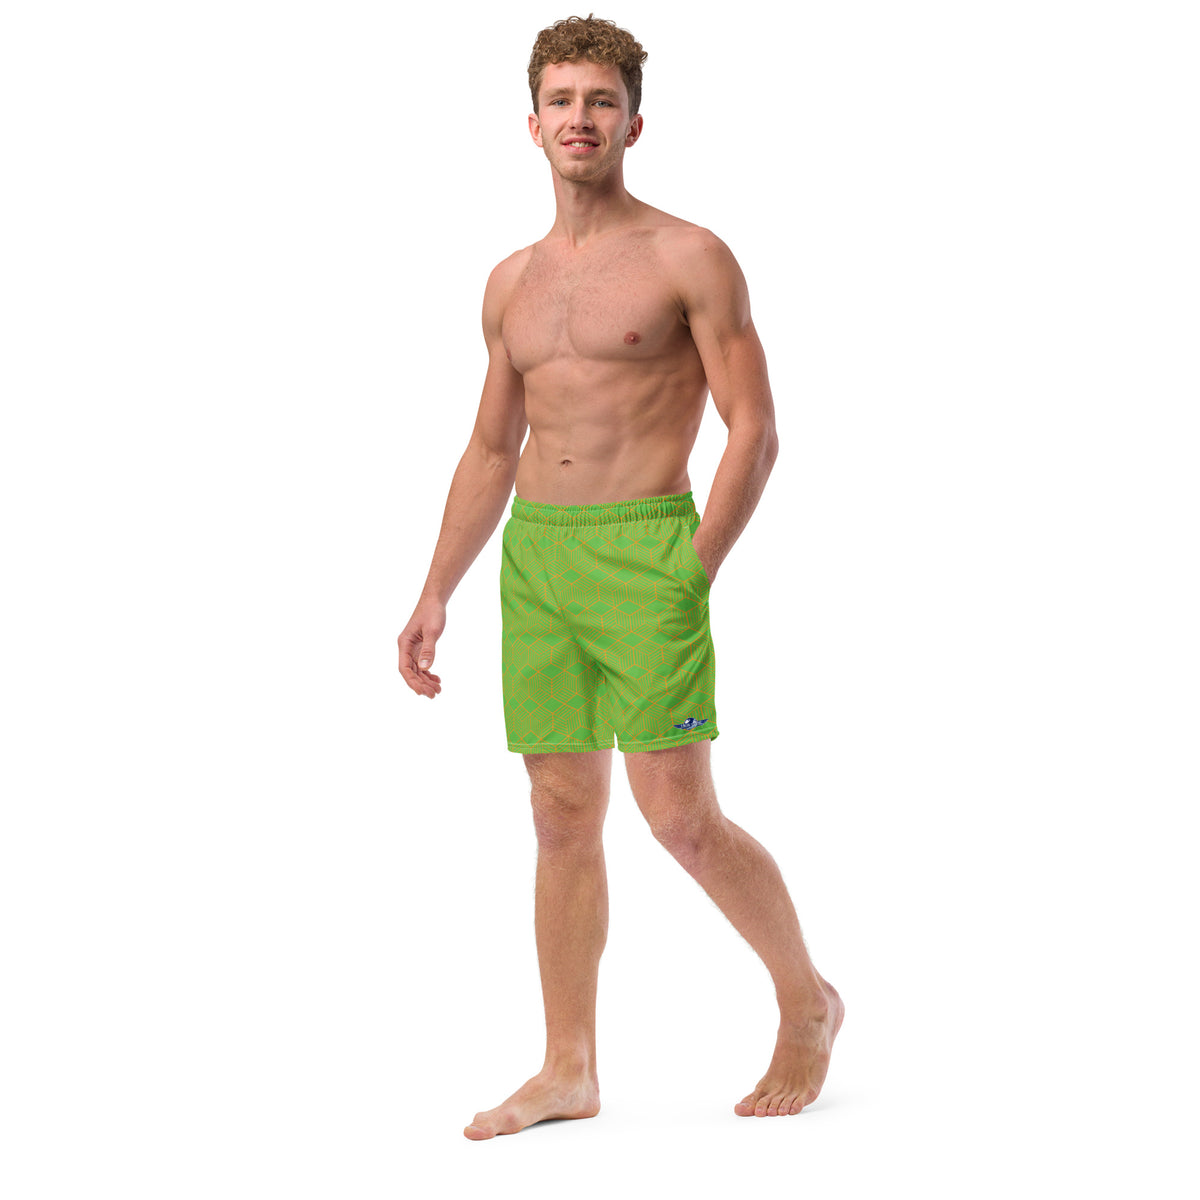 Kelly Green Geometric Men's swim trunks